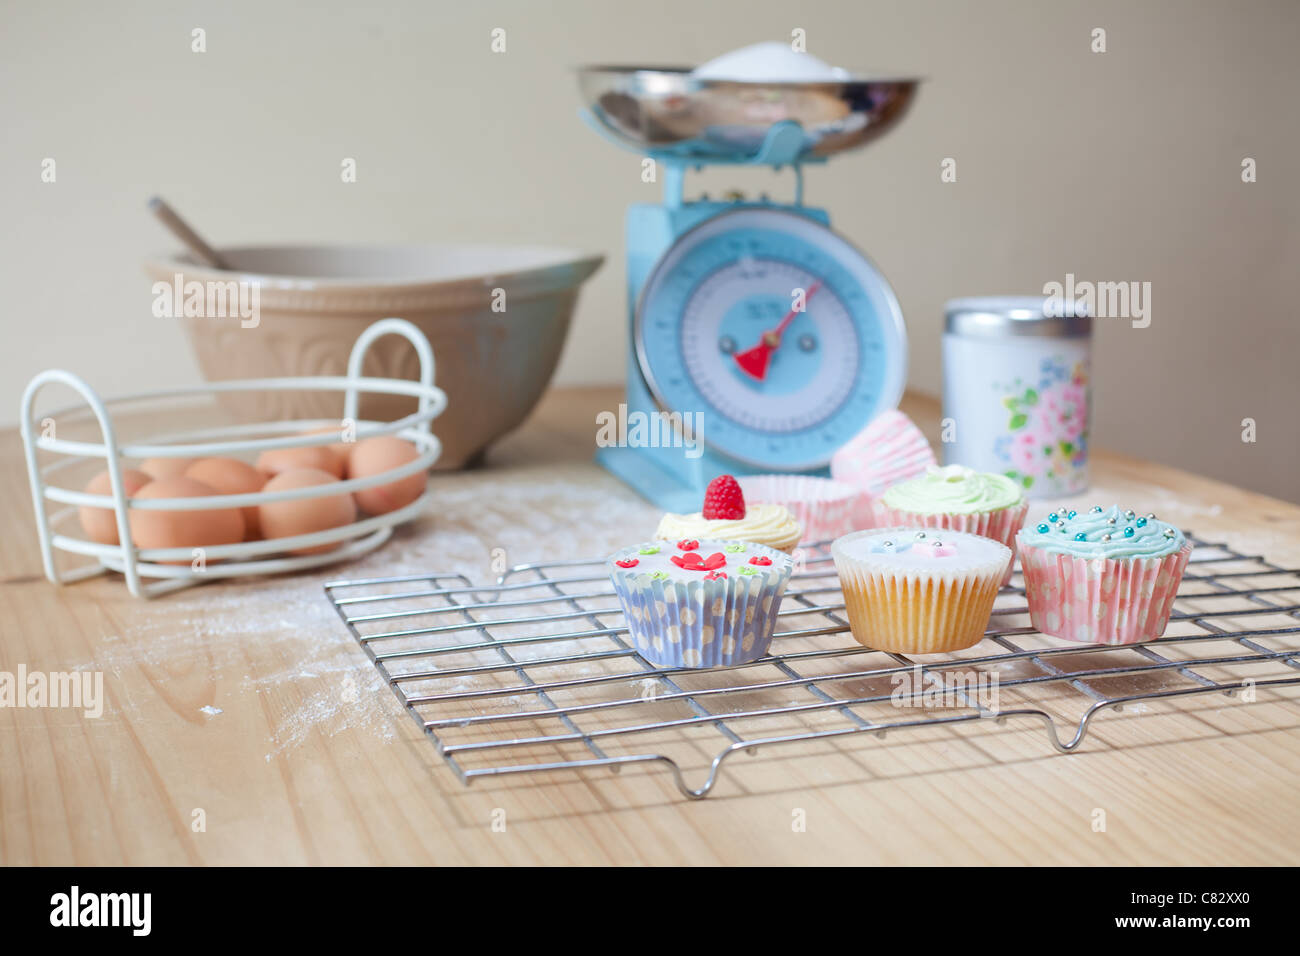 Baking equipment and fairy cakes Stock Photo